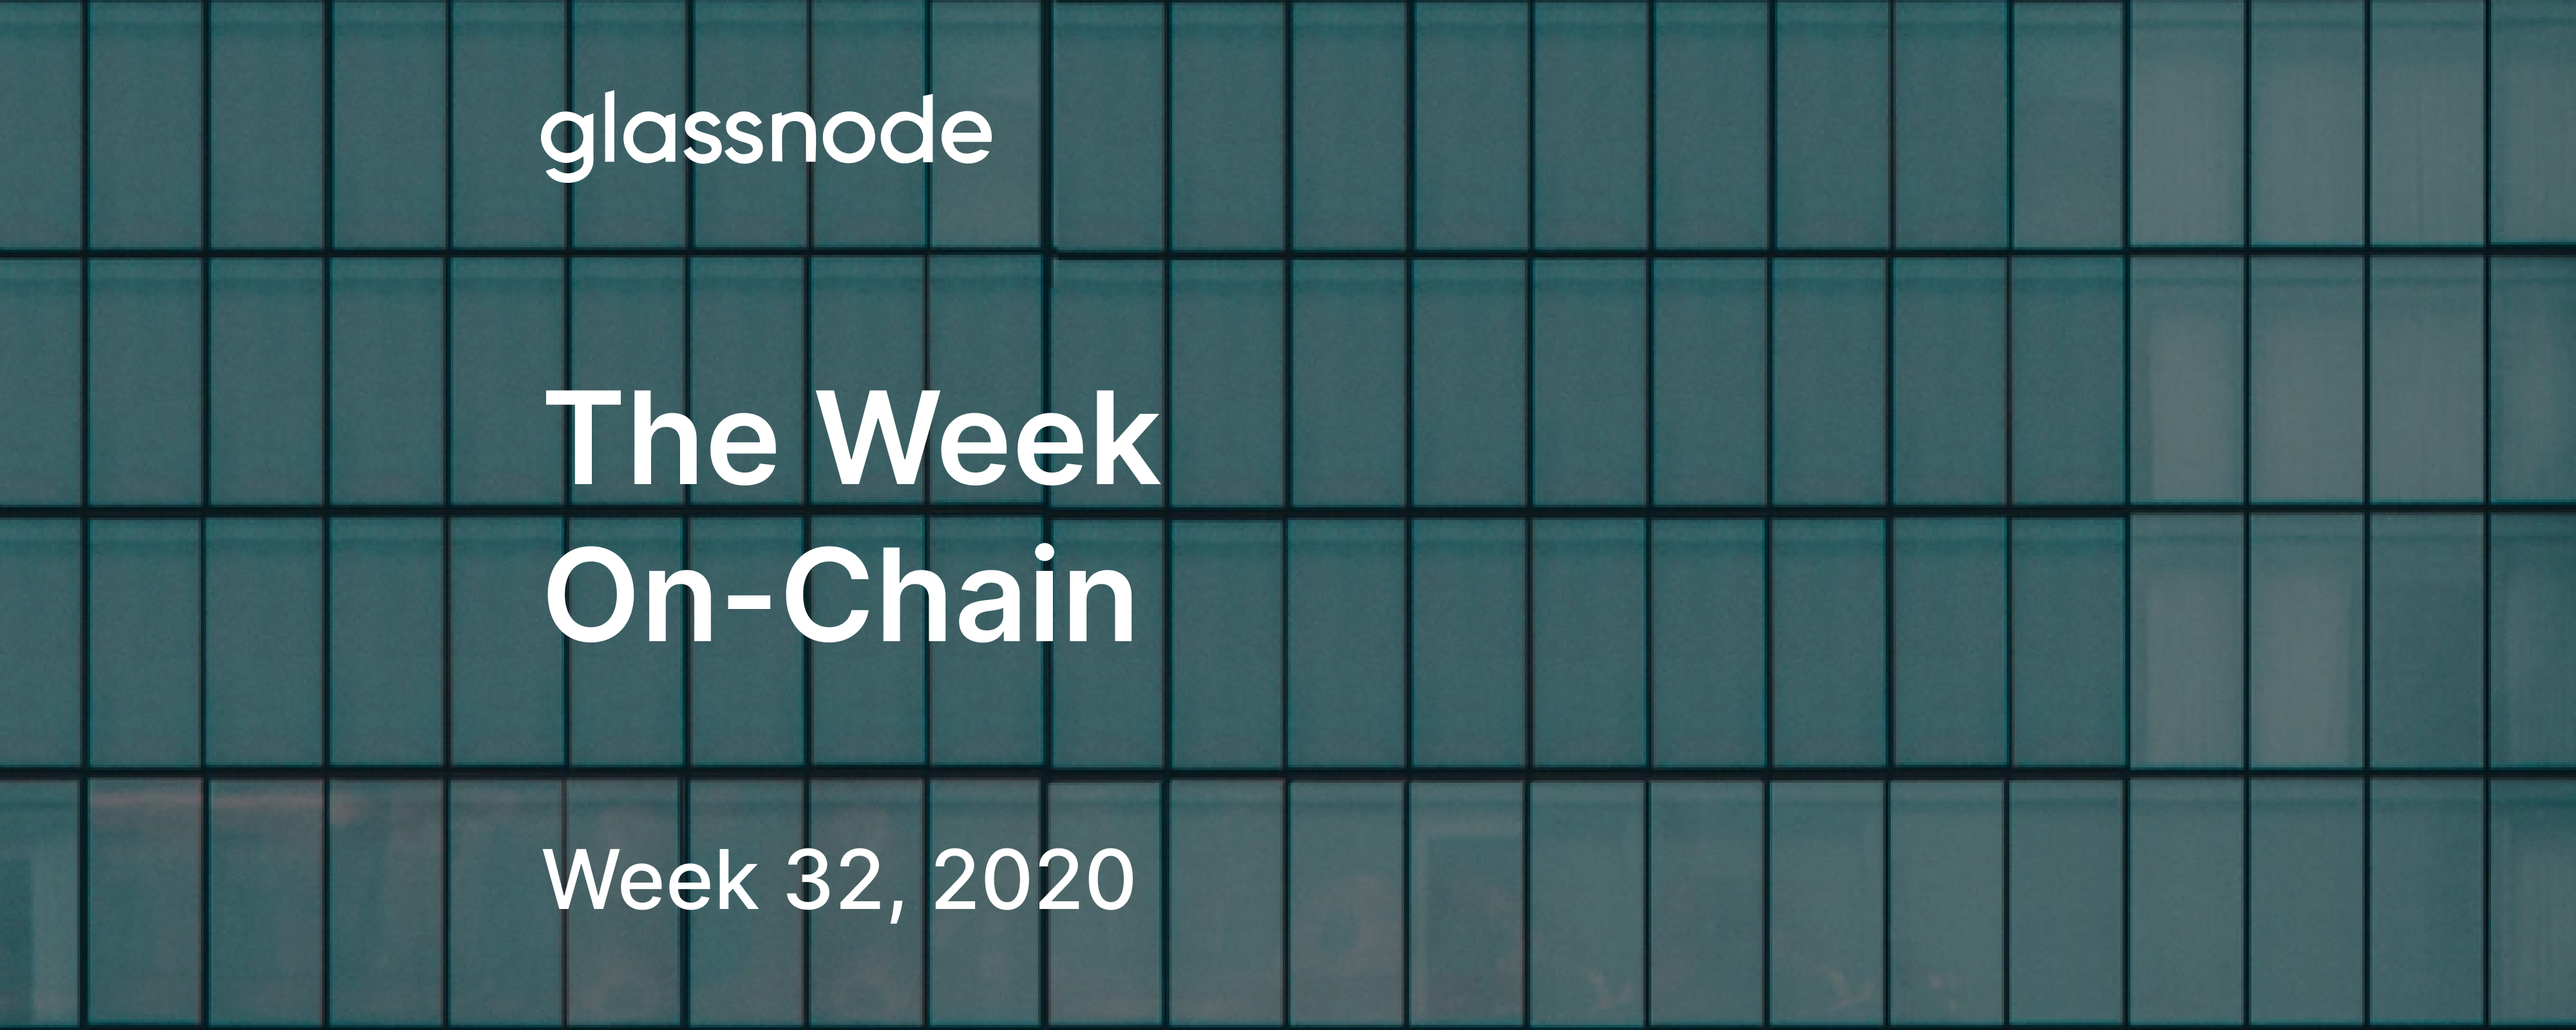 The Week On-Chain (Week 32, 2020)